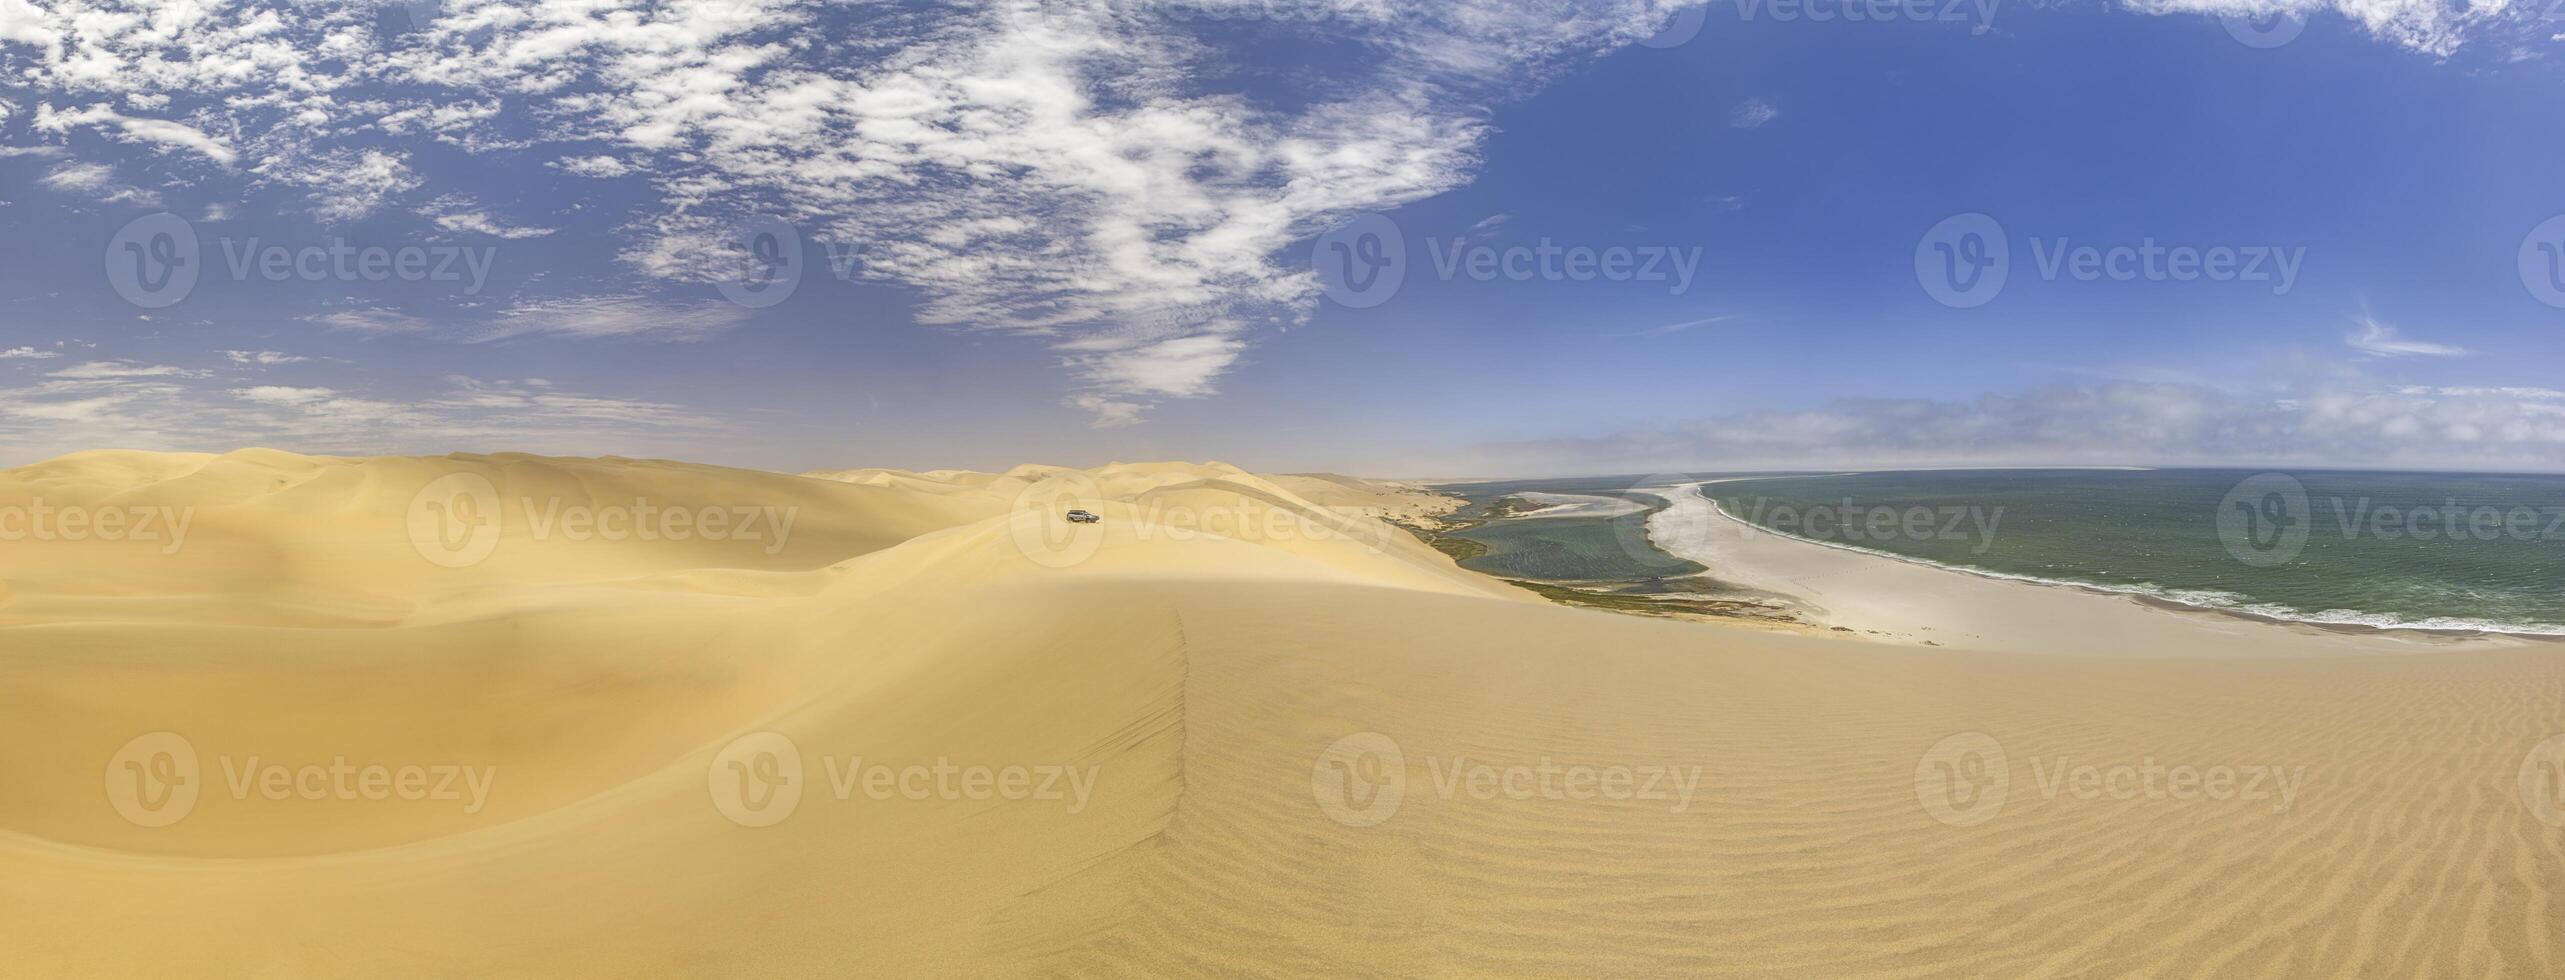 bild av de sanddyner av smörgås hamn i namibia på de atlanten kust under de dag foto